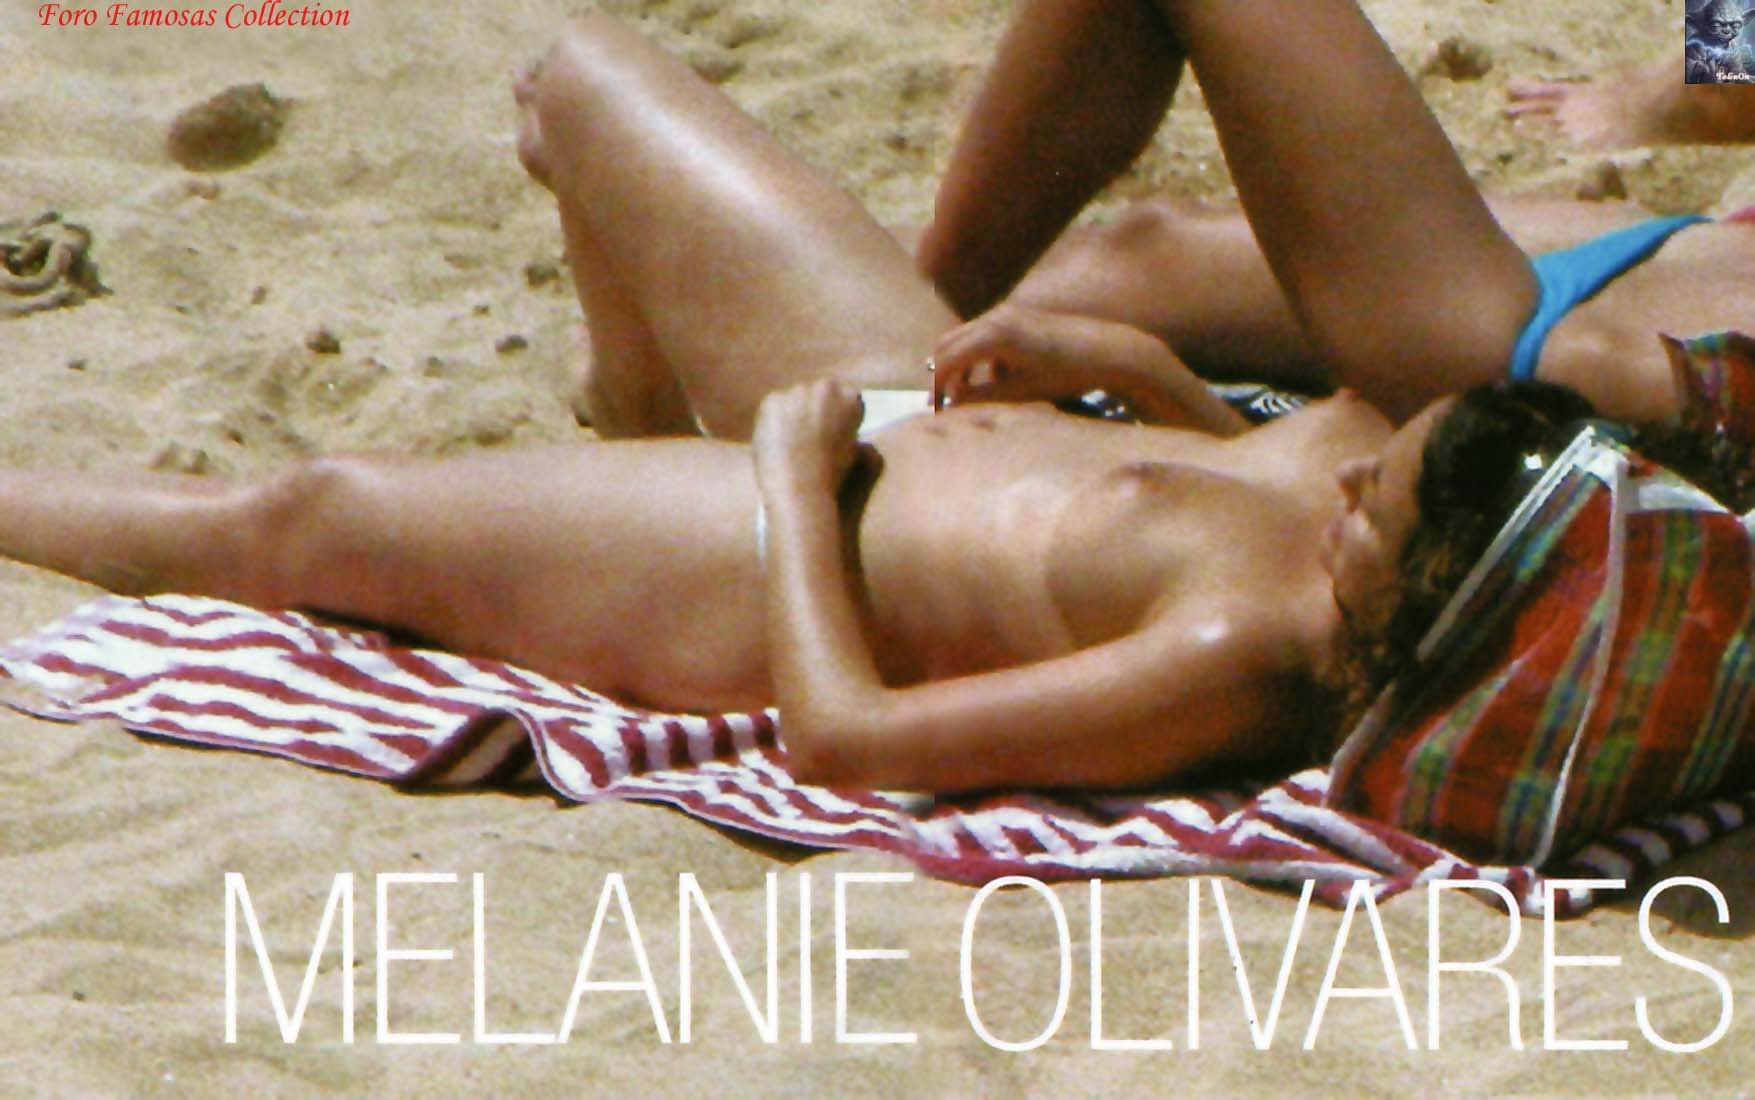 Melanie olivares sexy